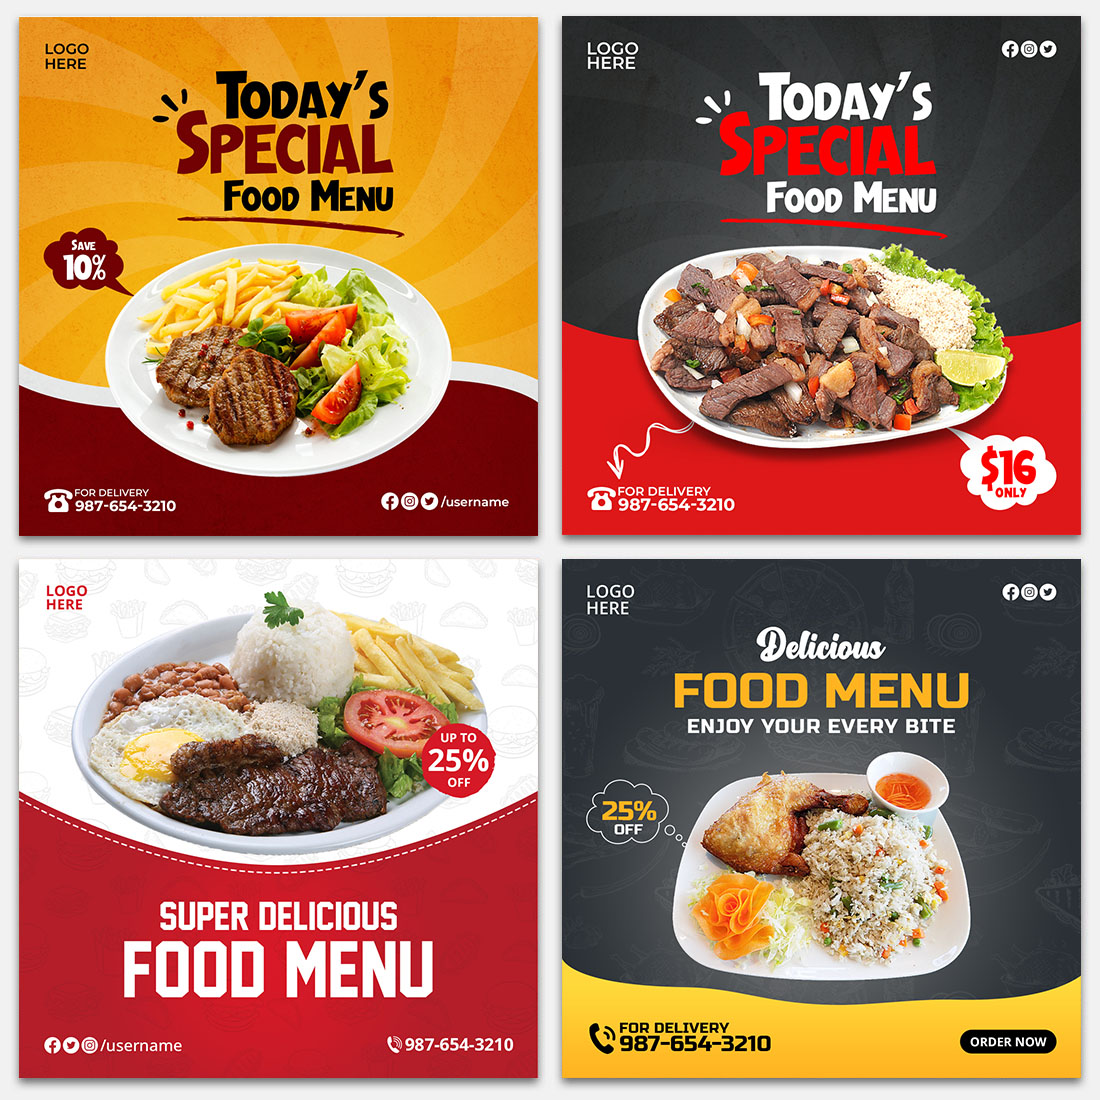 4 Food Menu Restaurant Social Media Banner Templates cover image.